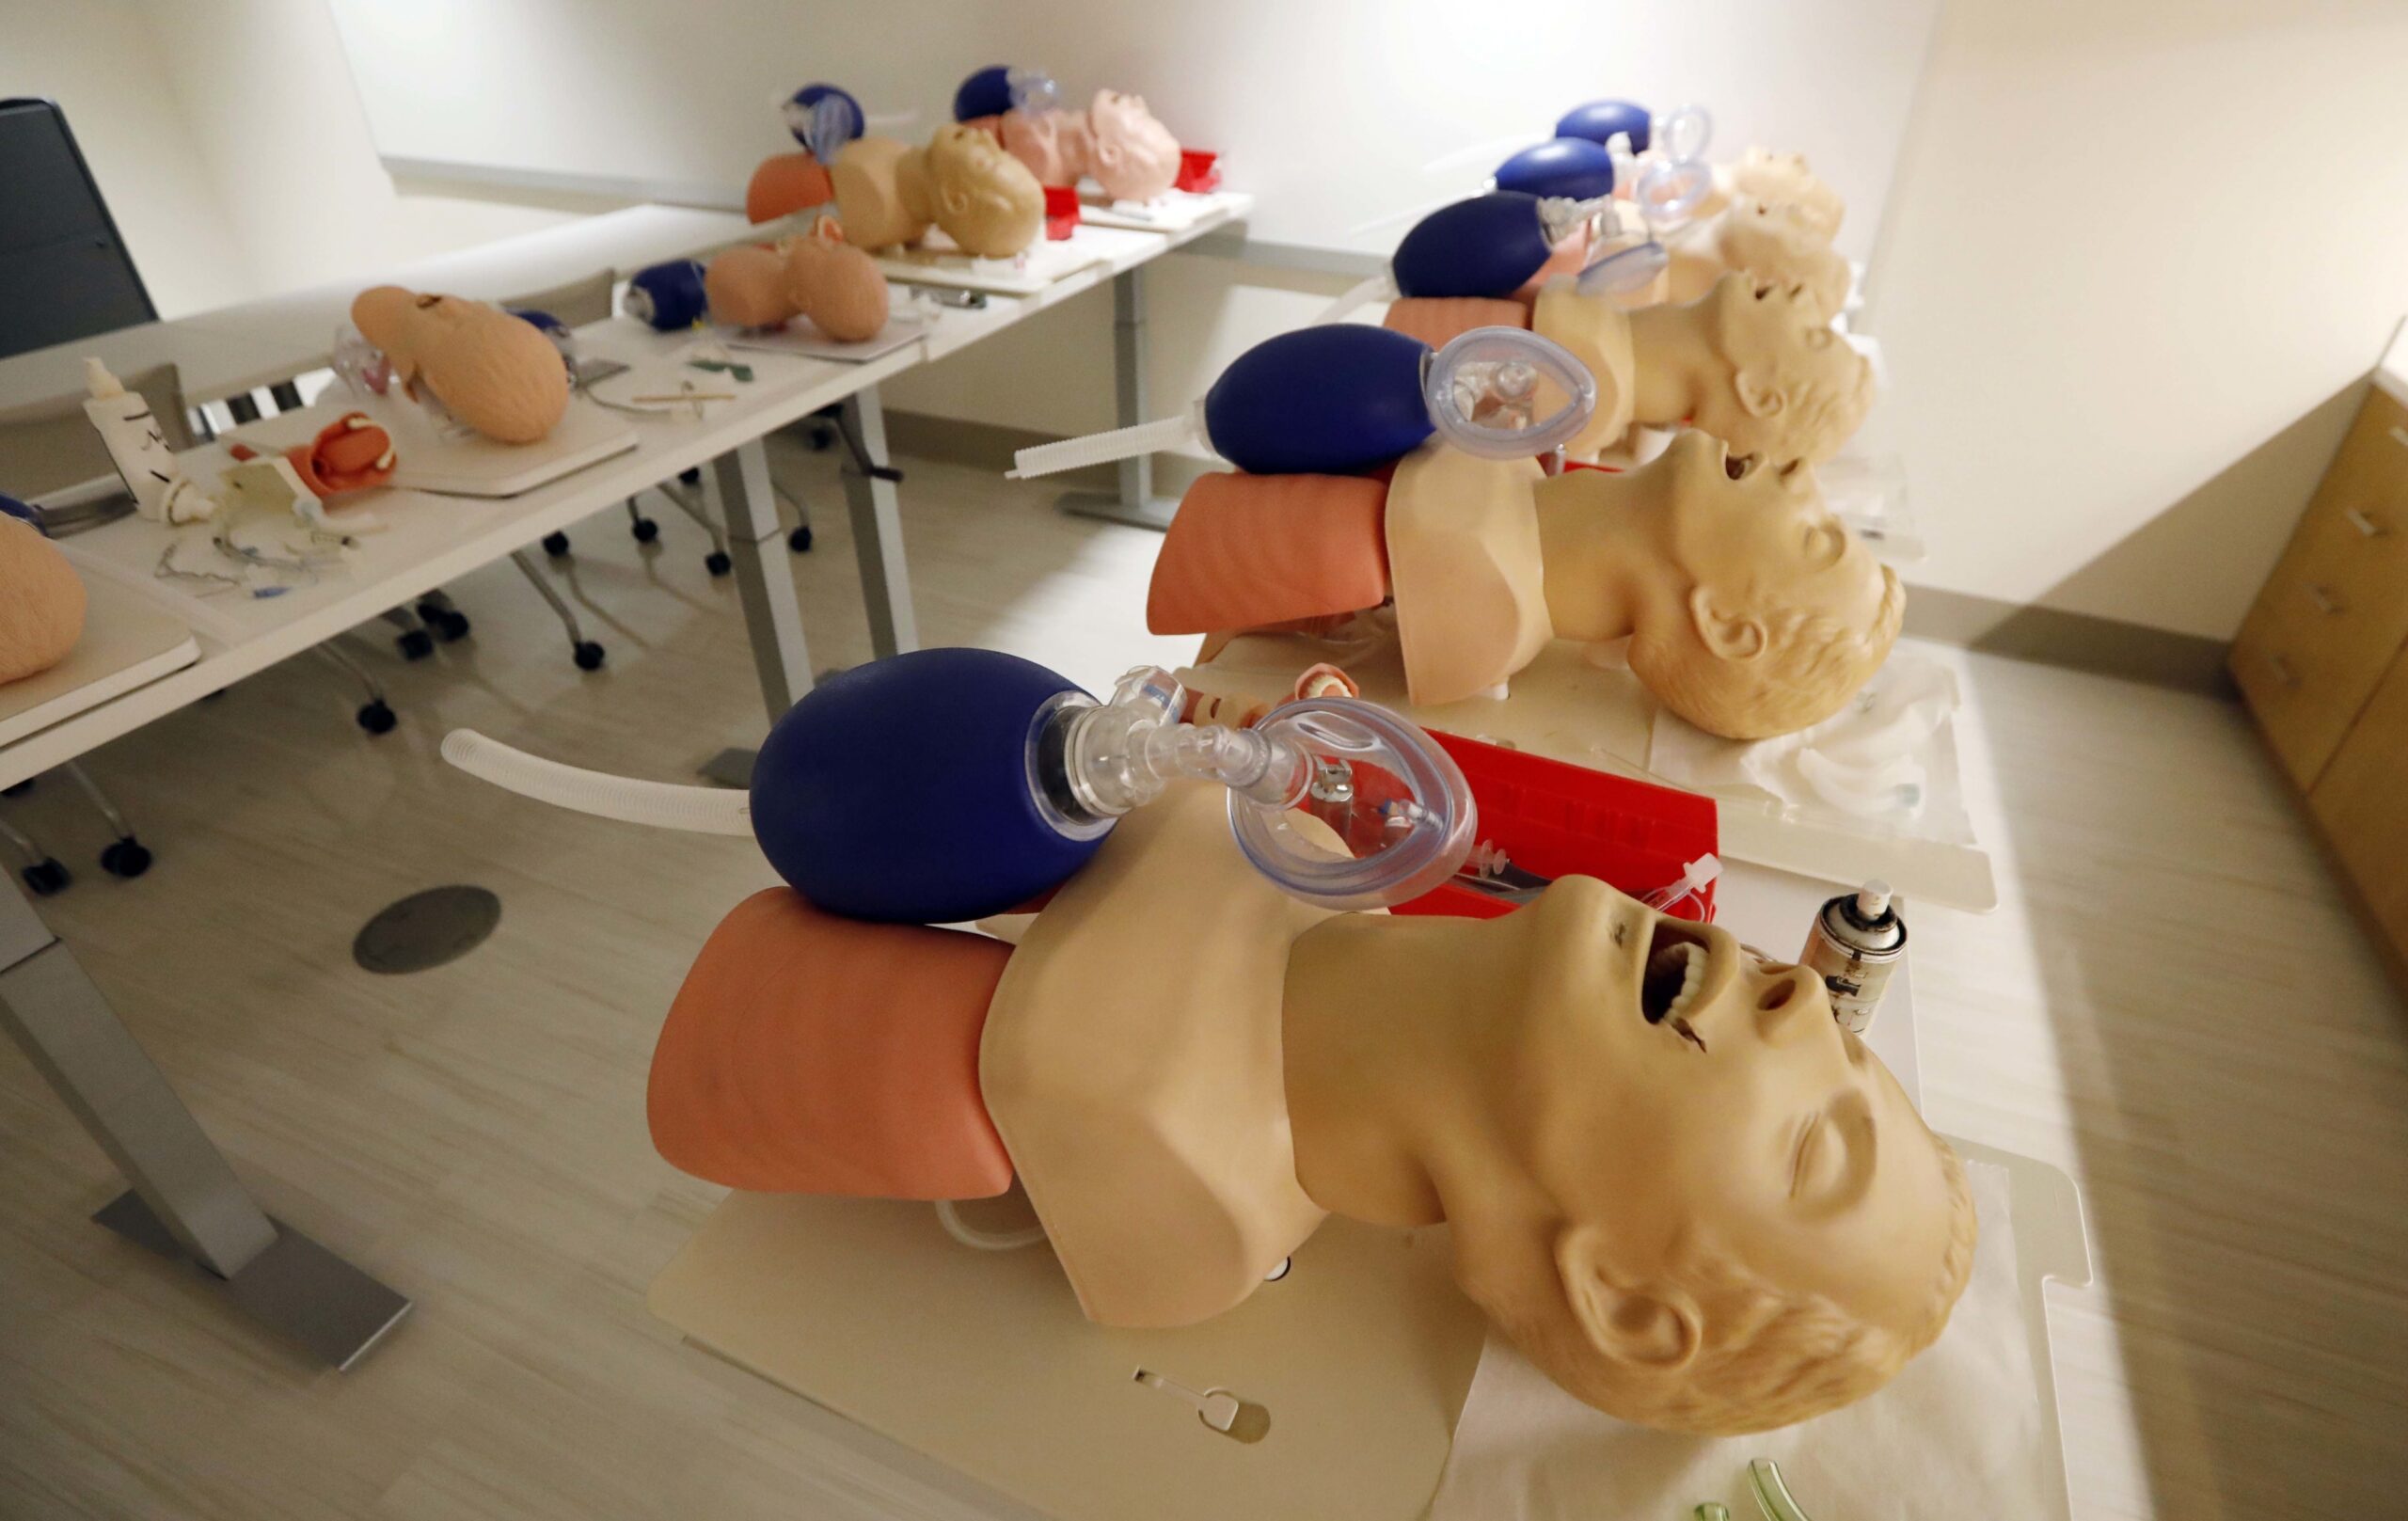 CPR mannequins